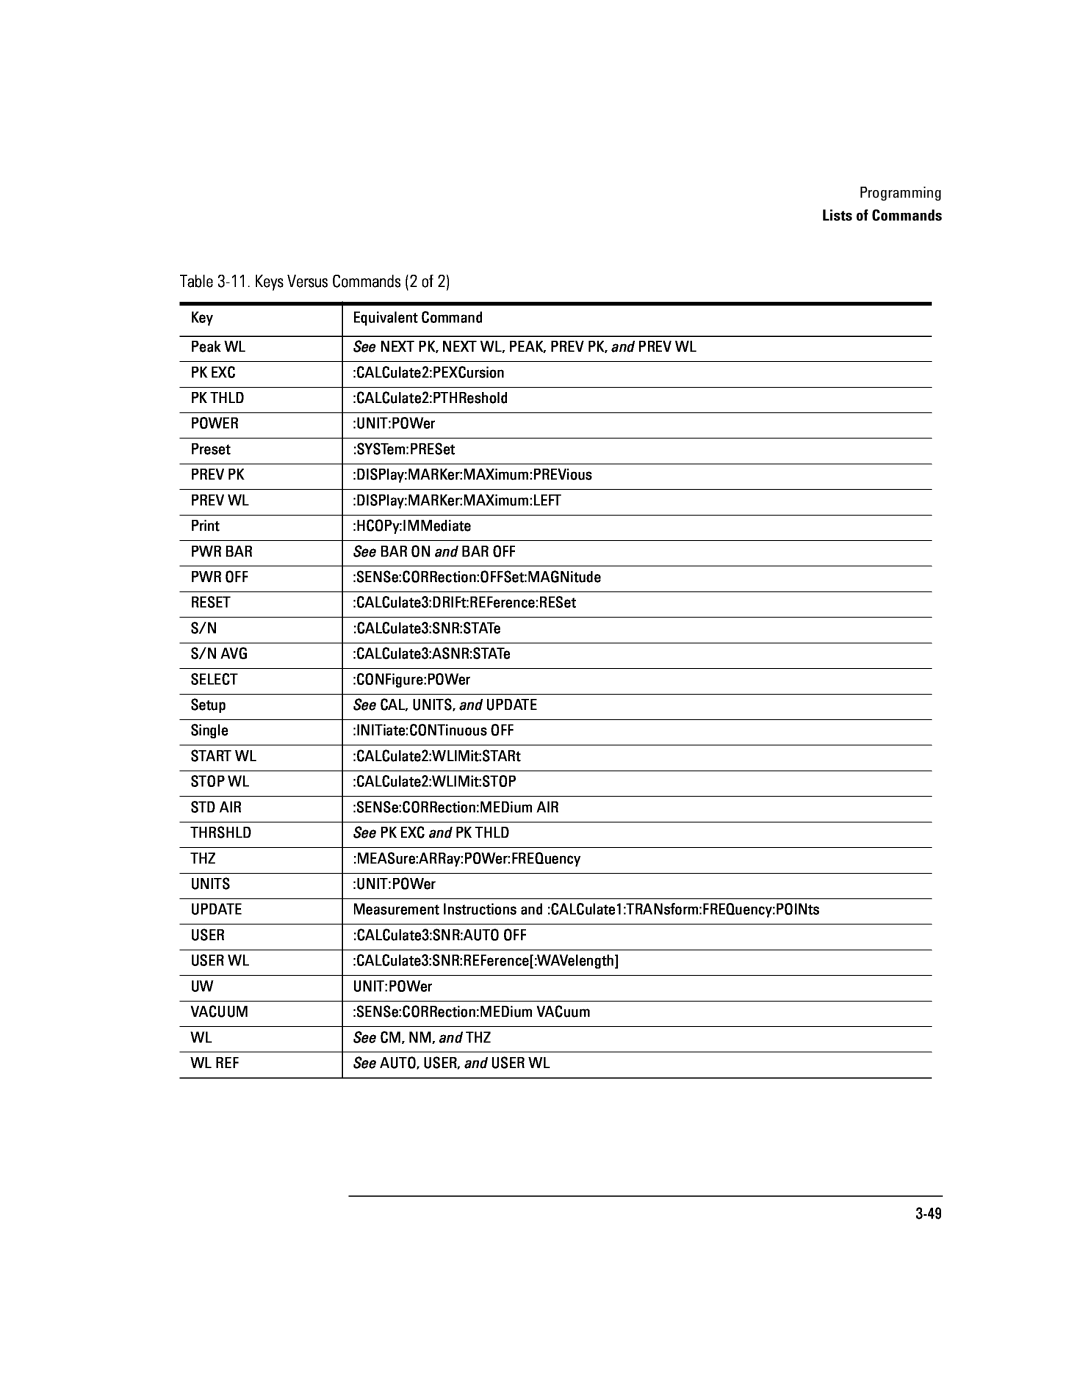 Agilent Technologies Agilent 86120C manual 11. Keys Versus Commands 2 of, Lists of Commands 